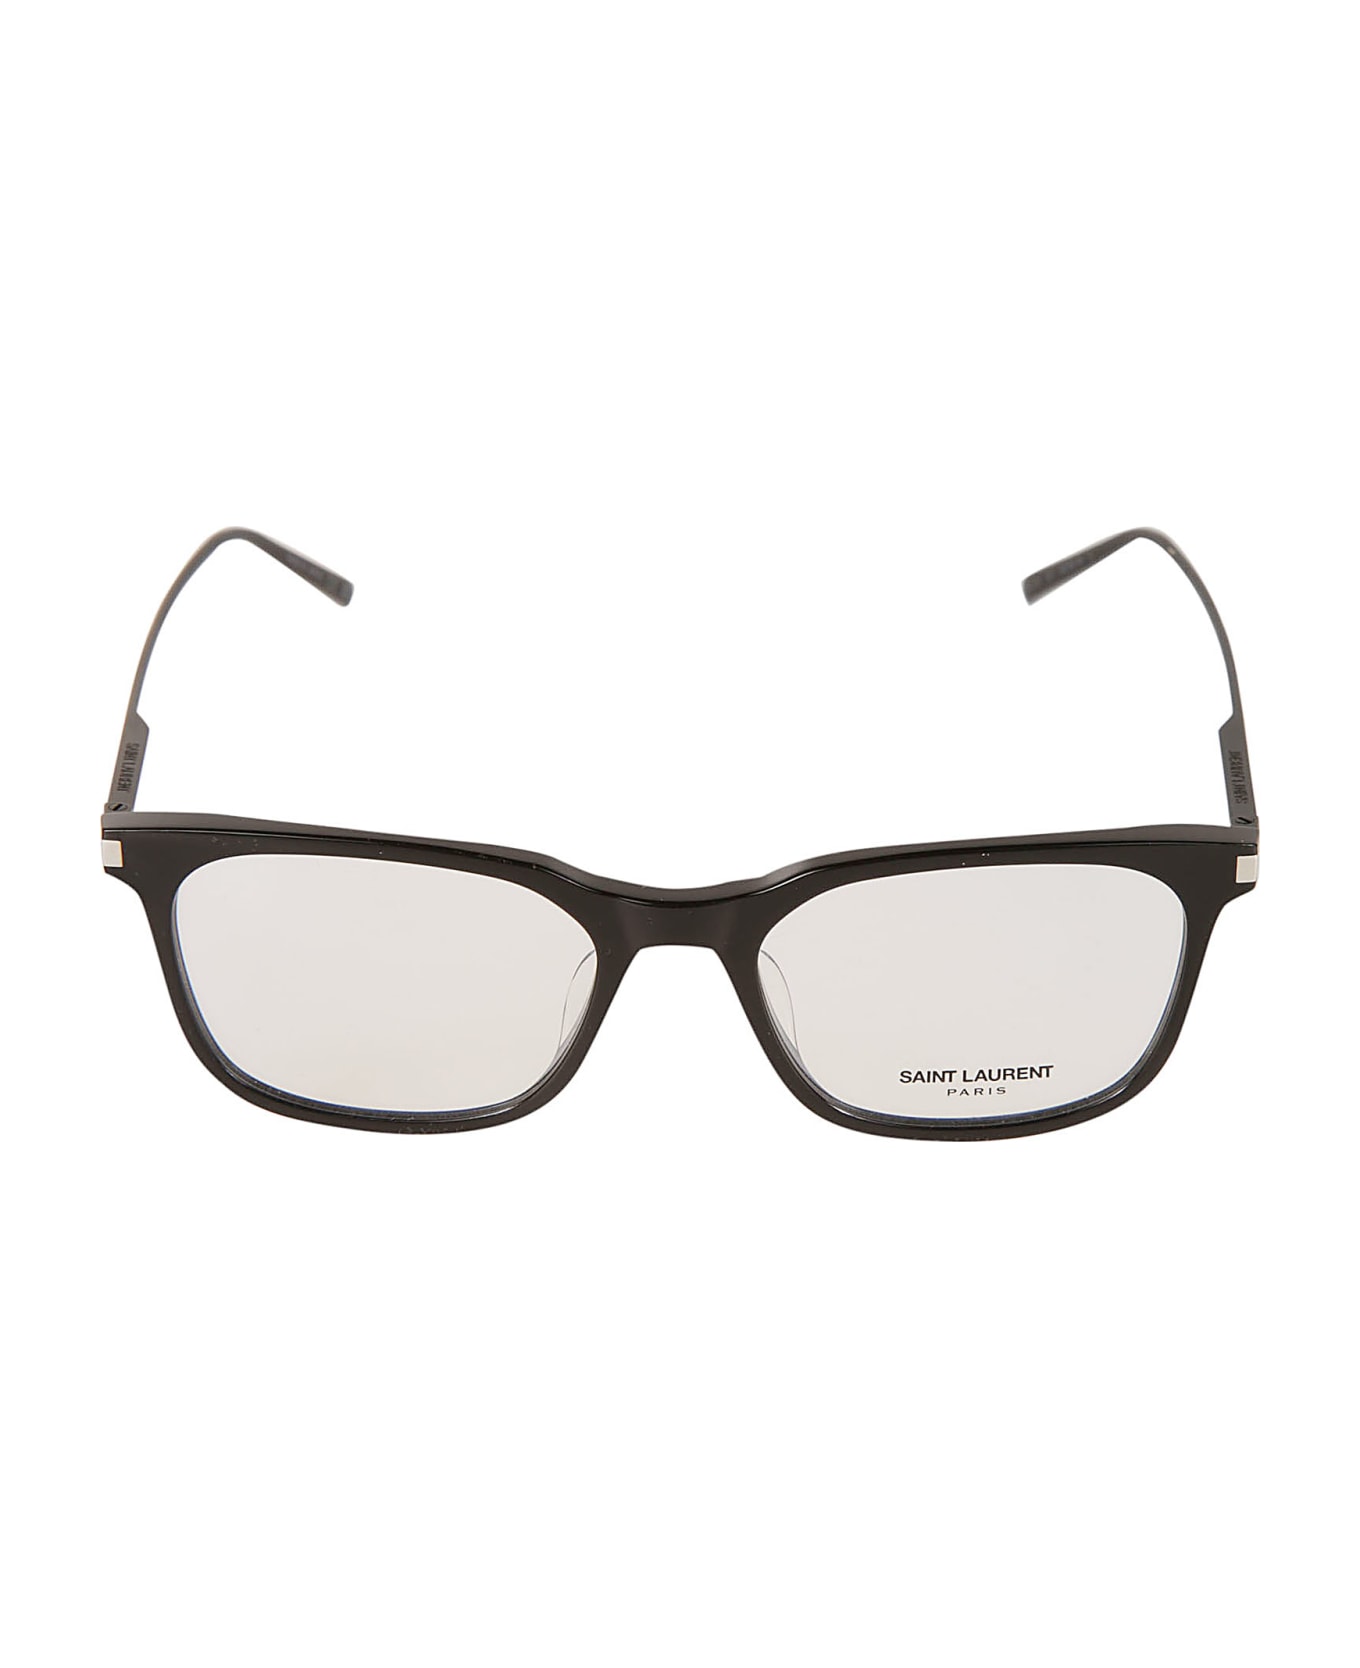 Saint Laurent Eyewear Sl 578 Frame - 001 black black transpare